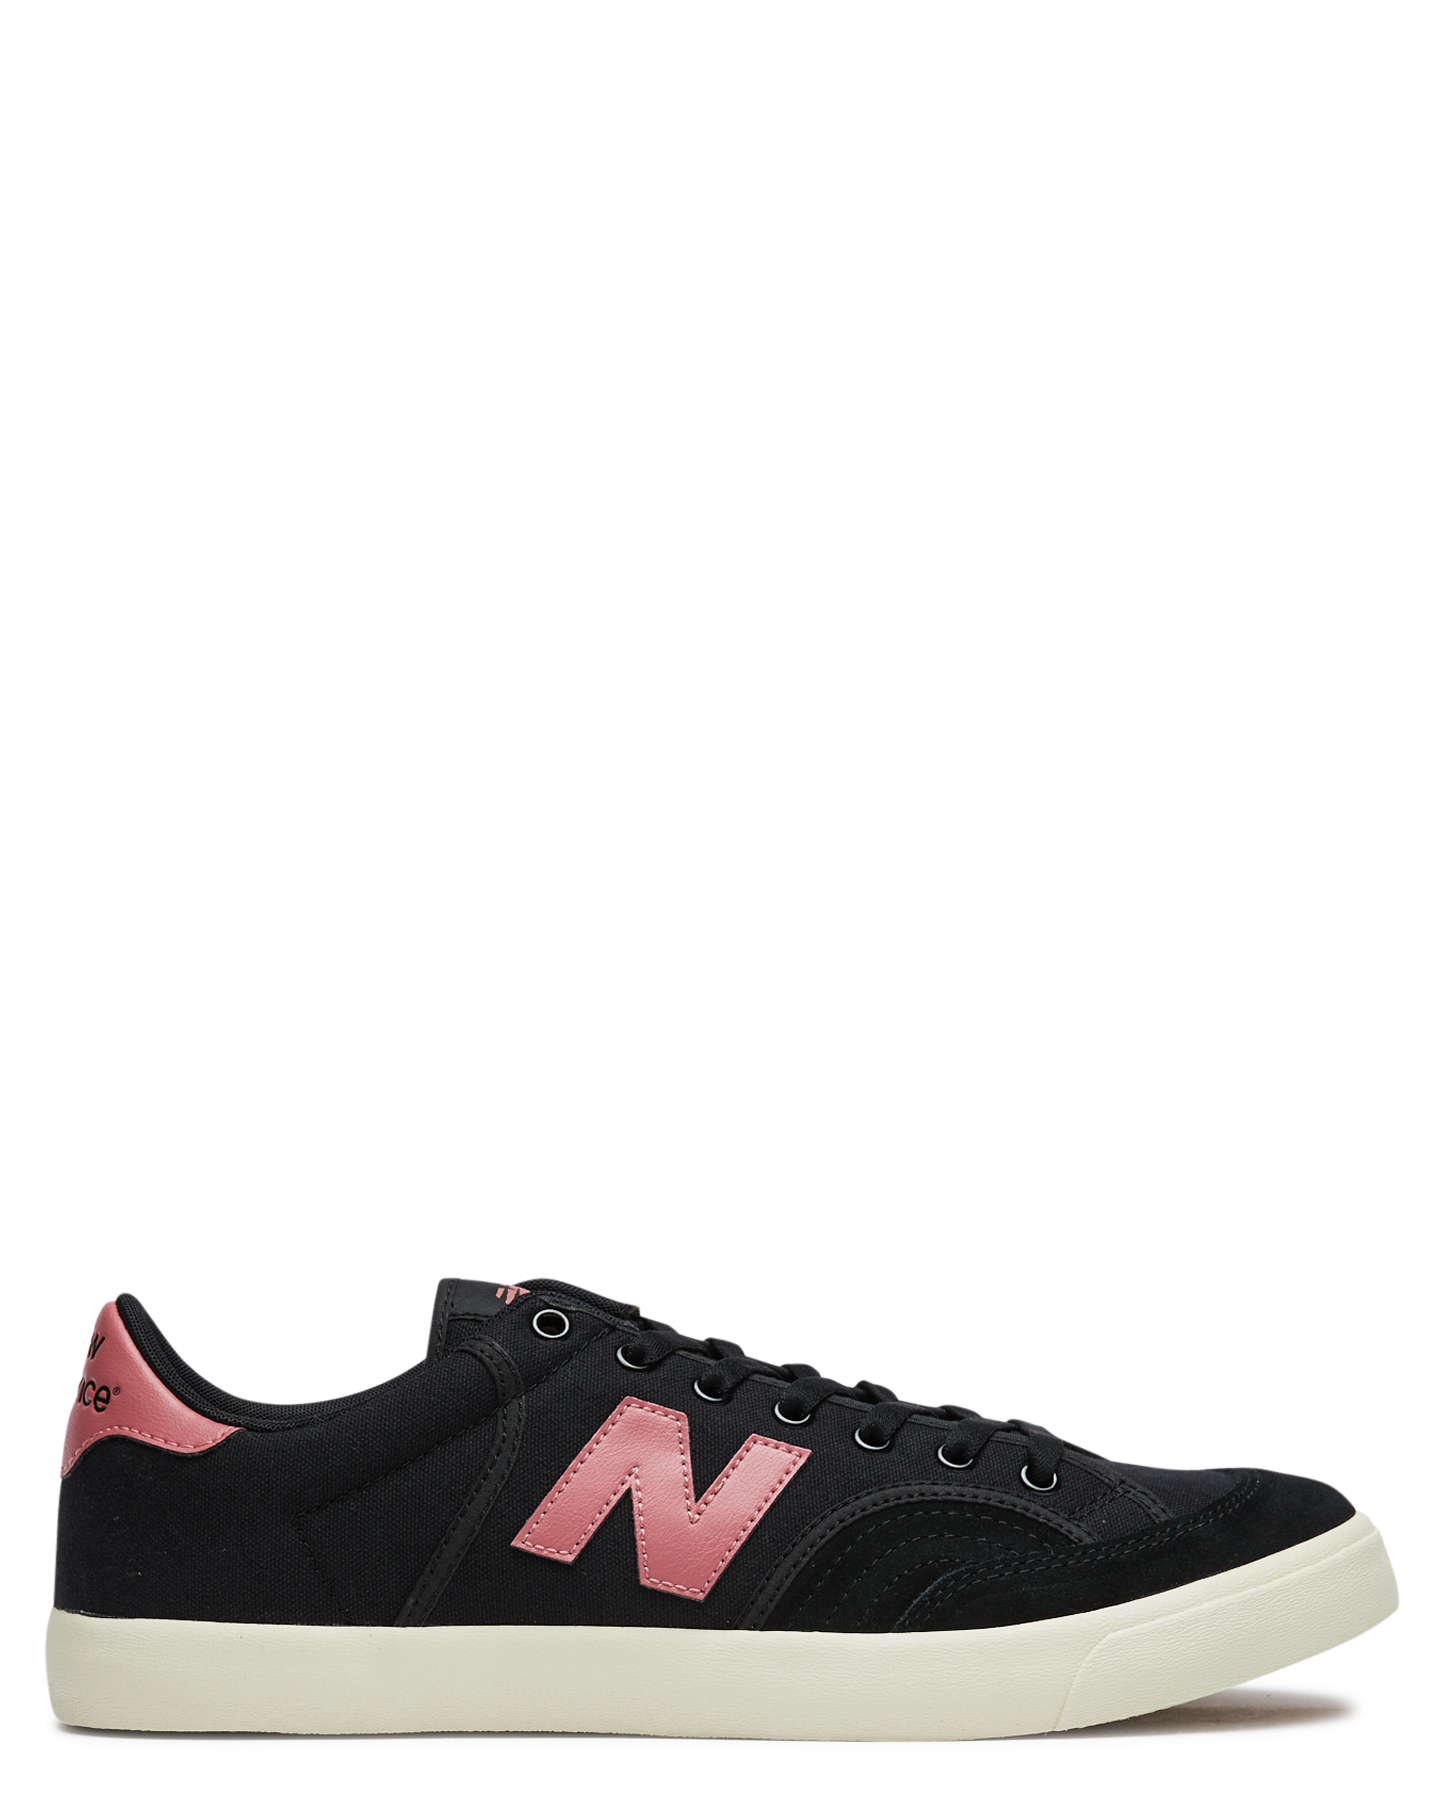 New Balance 212 Mens Shoe - Black Pink 